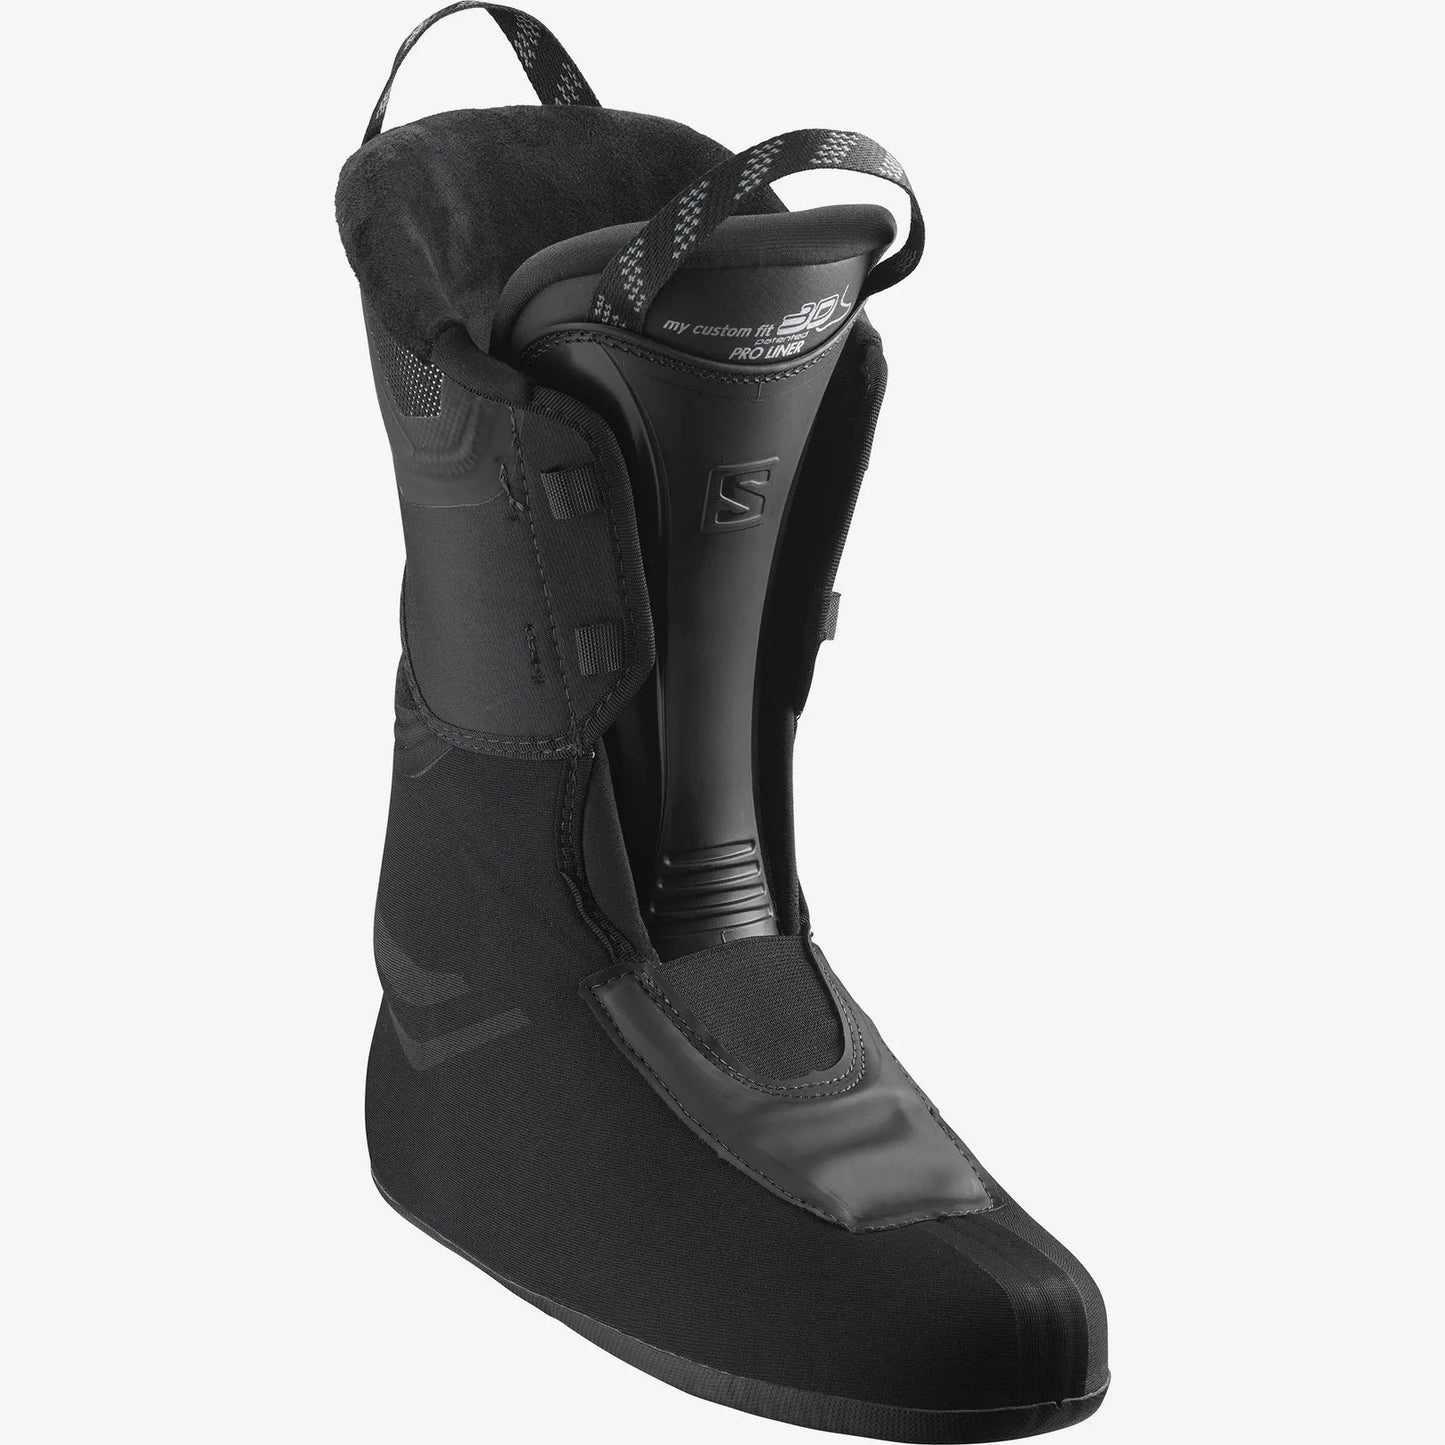 Salomon Women's Shift Pro 110 Alpine Touring Ski Boots - STERLING